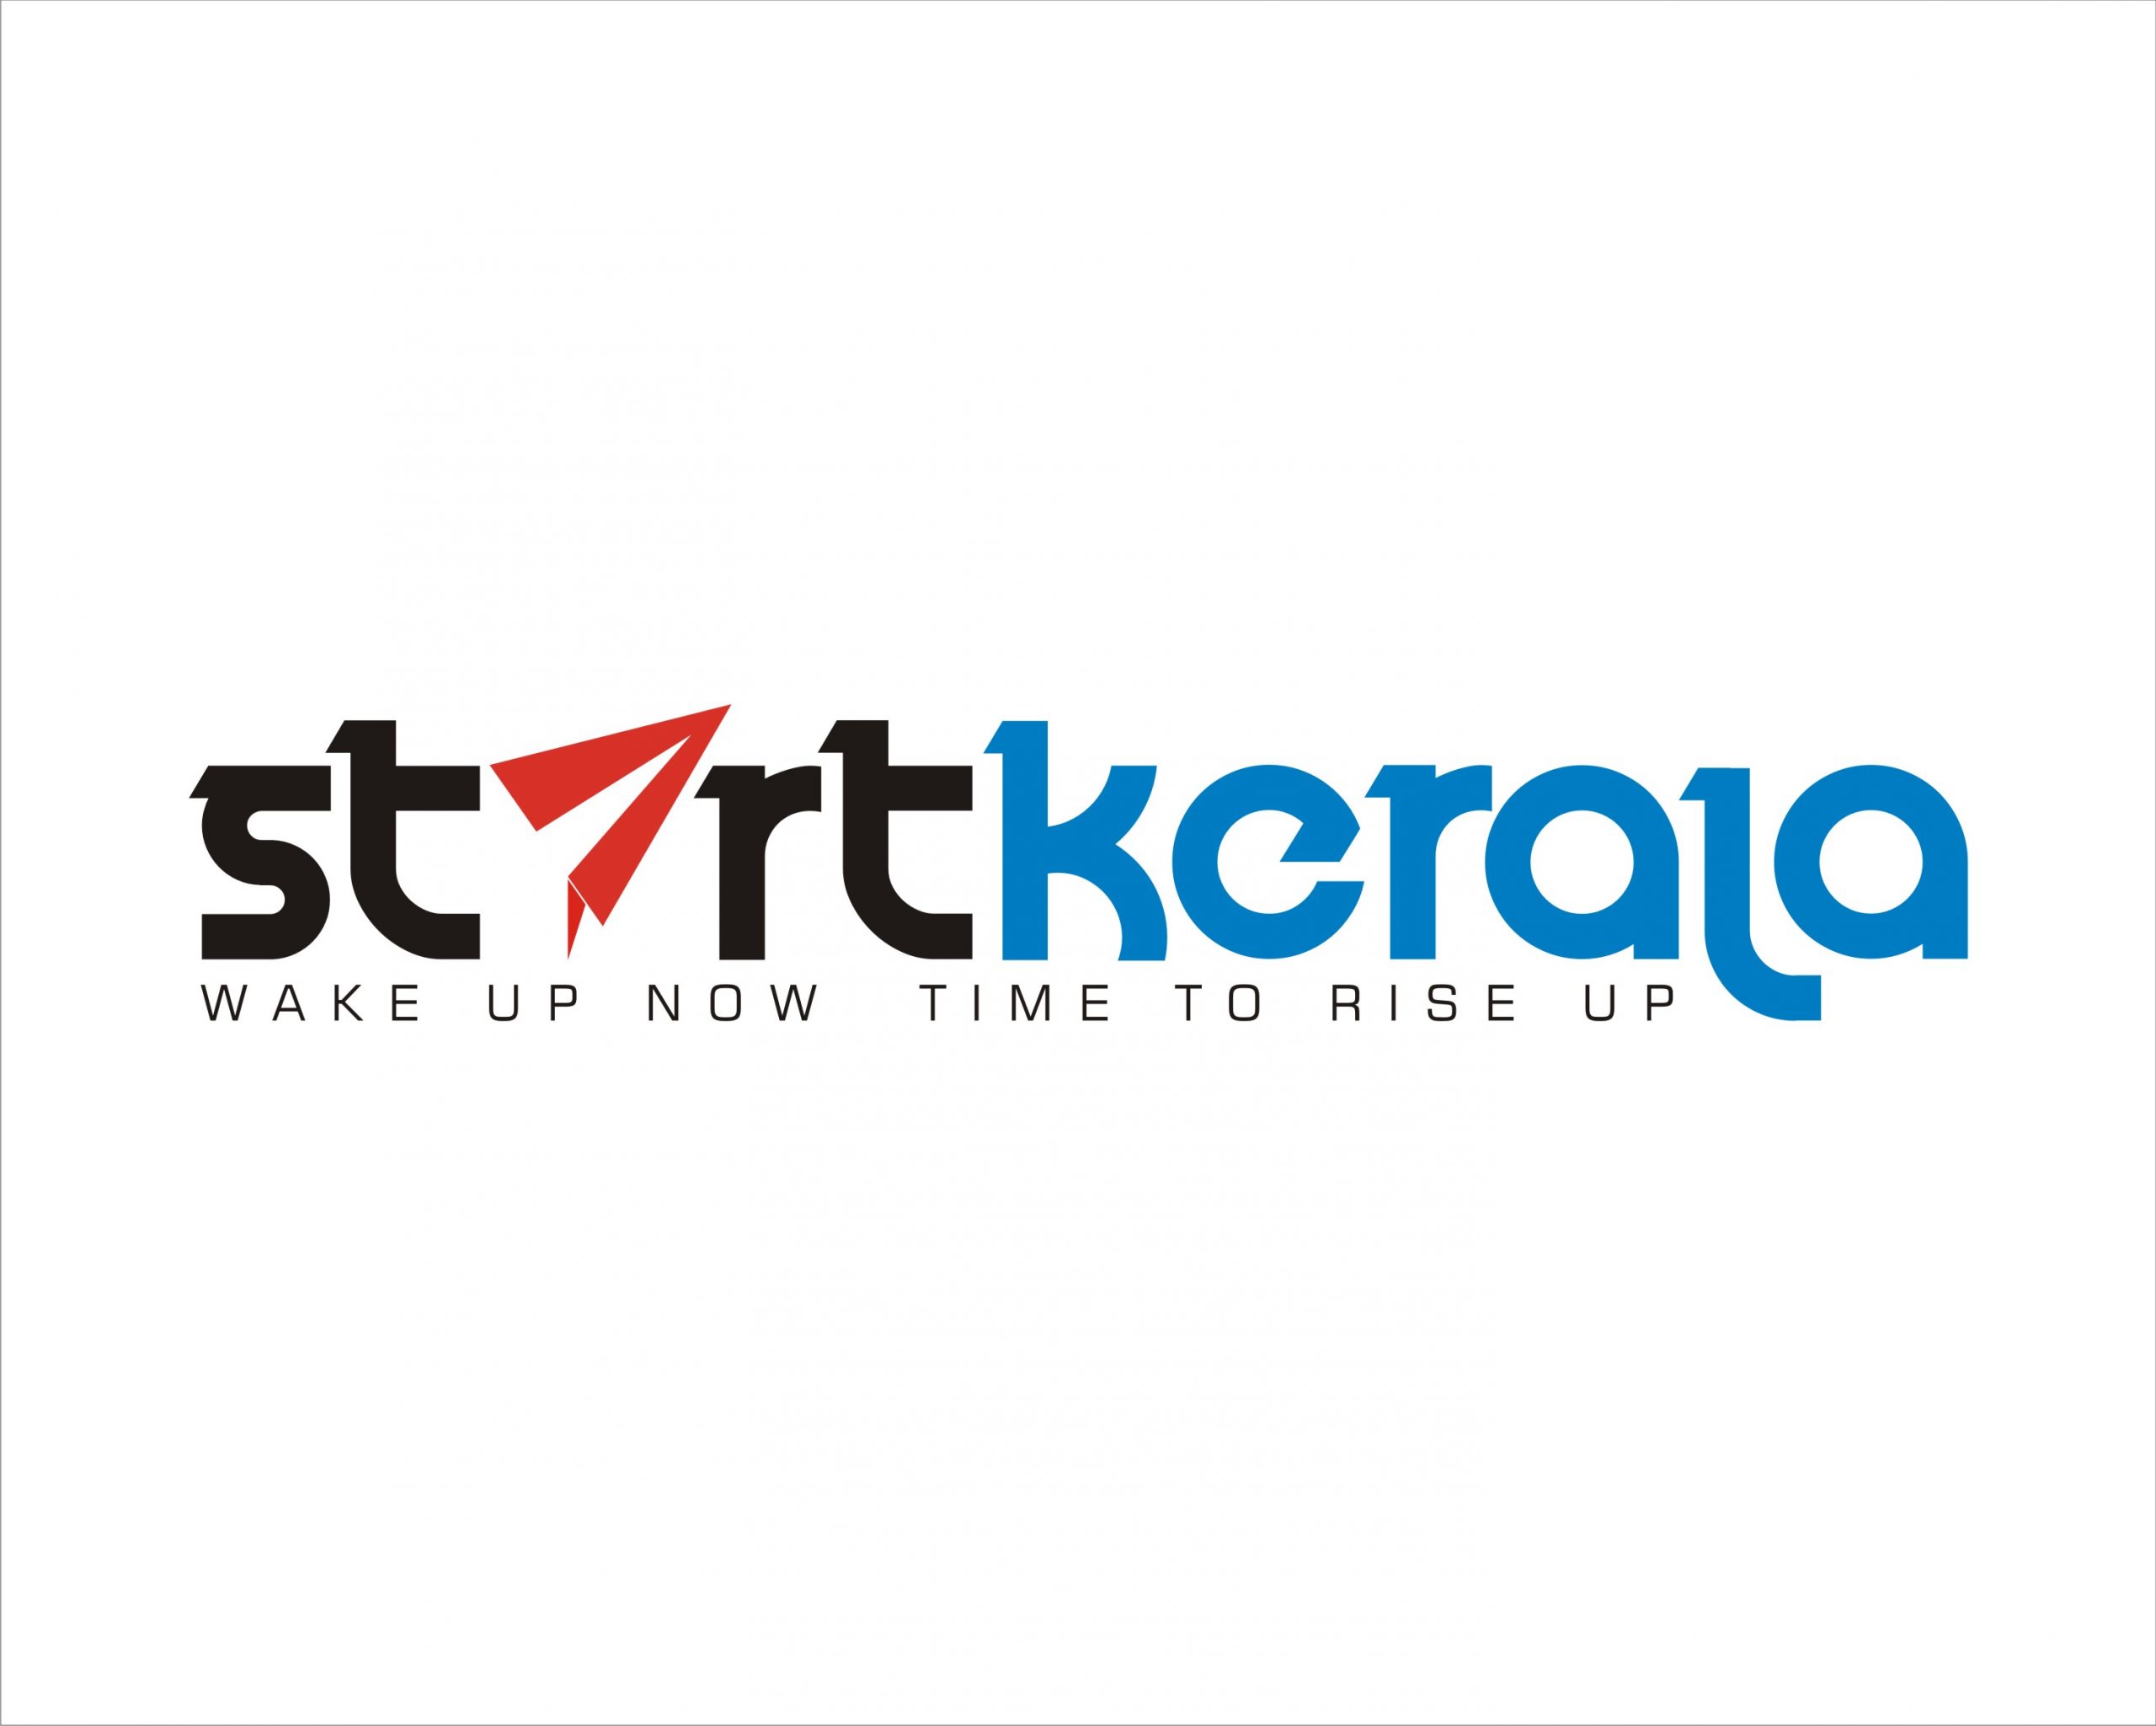 Start Kerala